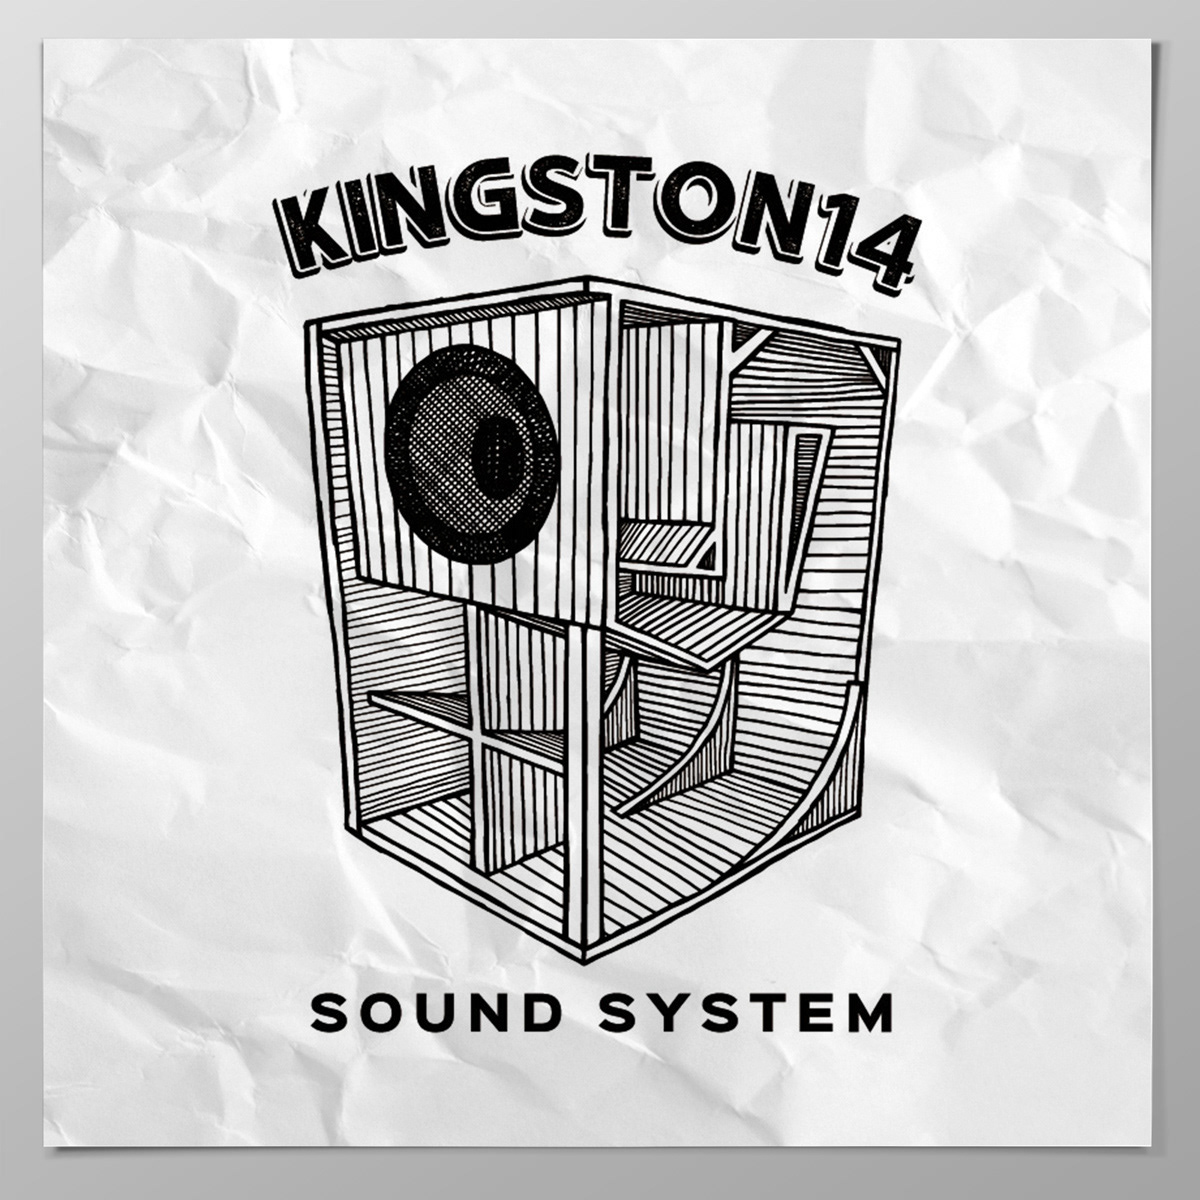 graphic design  ILLUSTRATION  ilustracion kingston14 scoop sound system